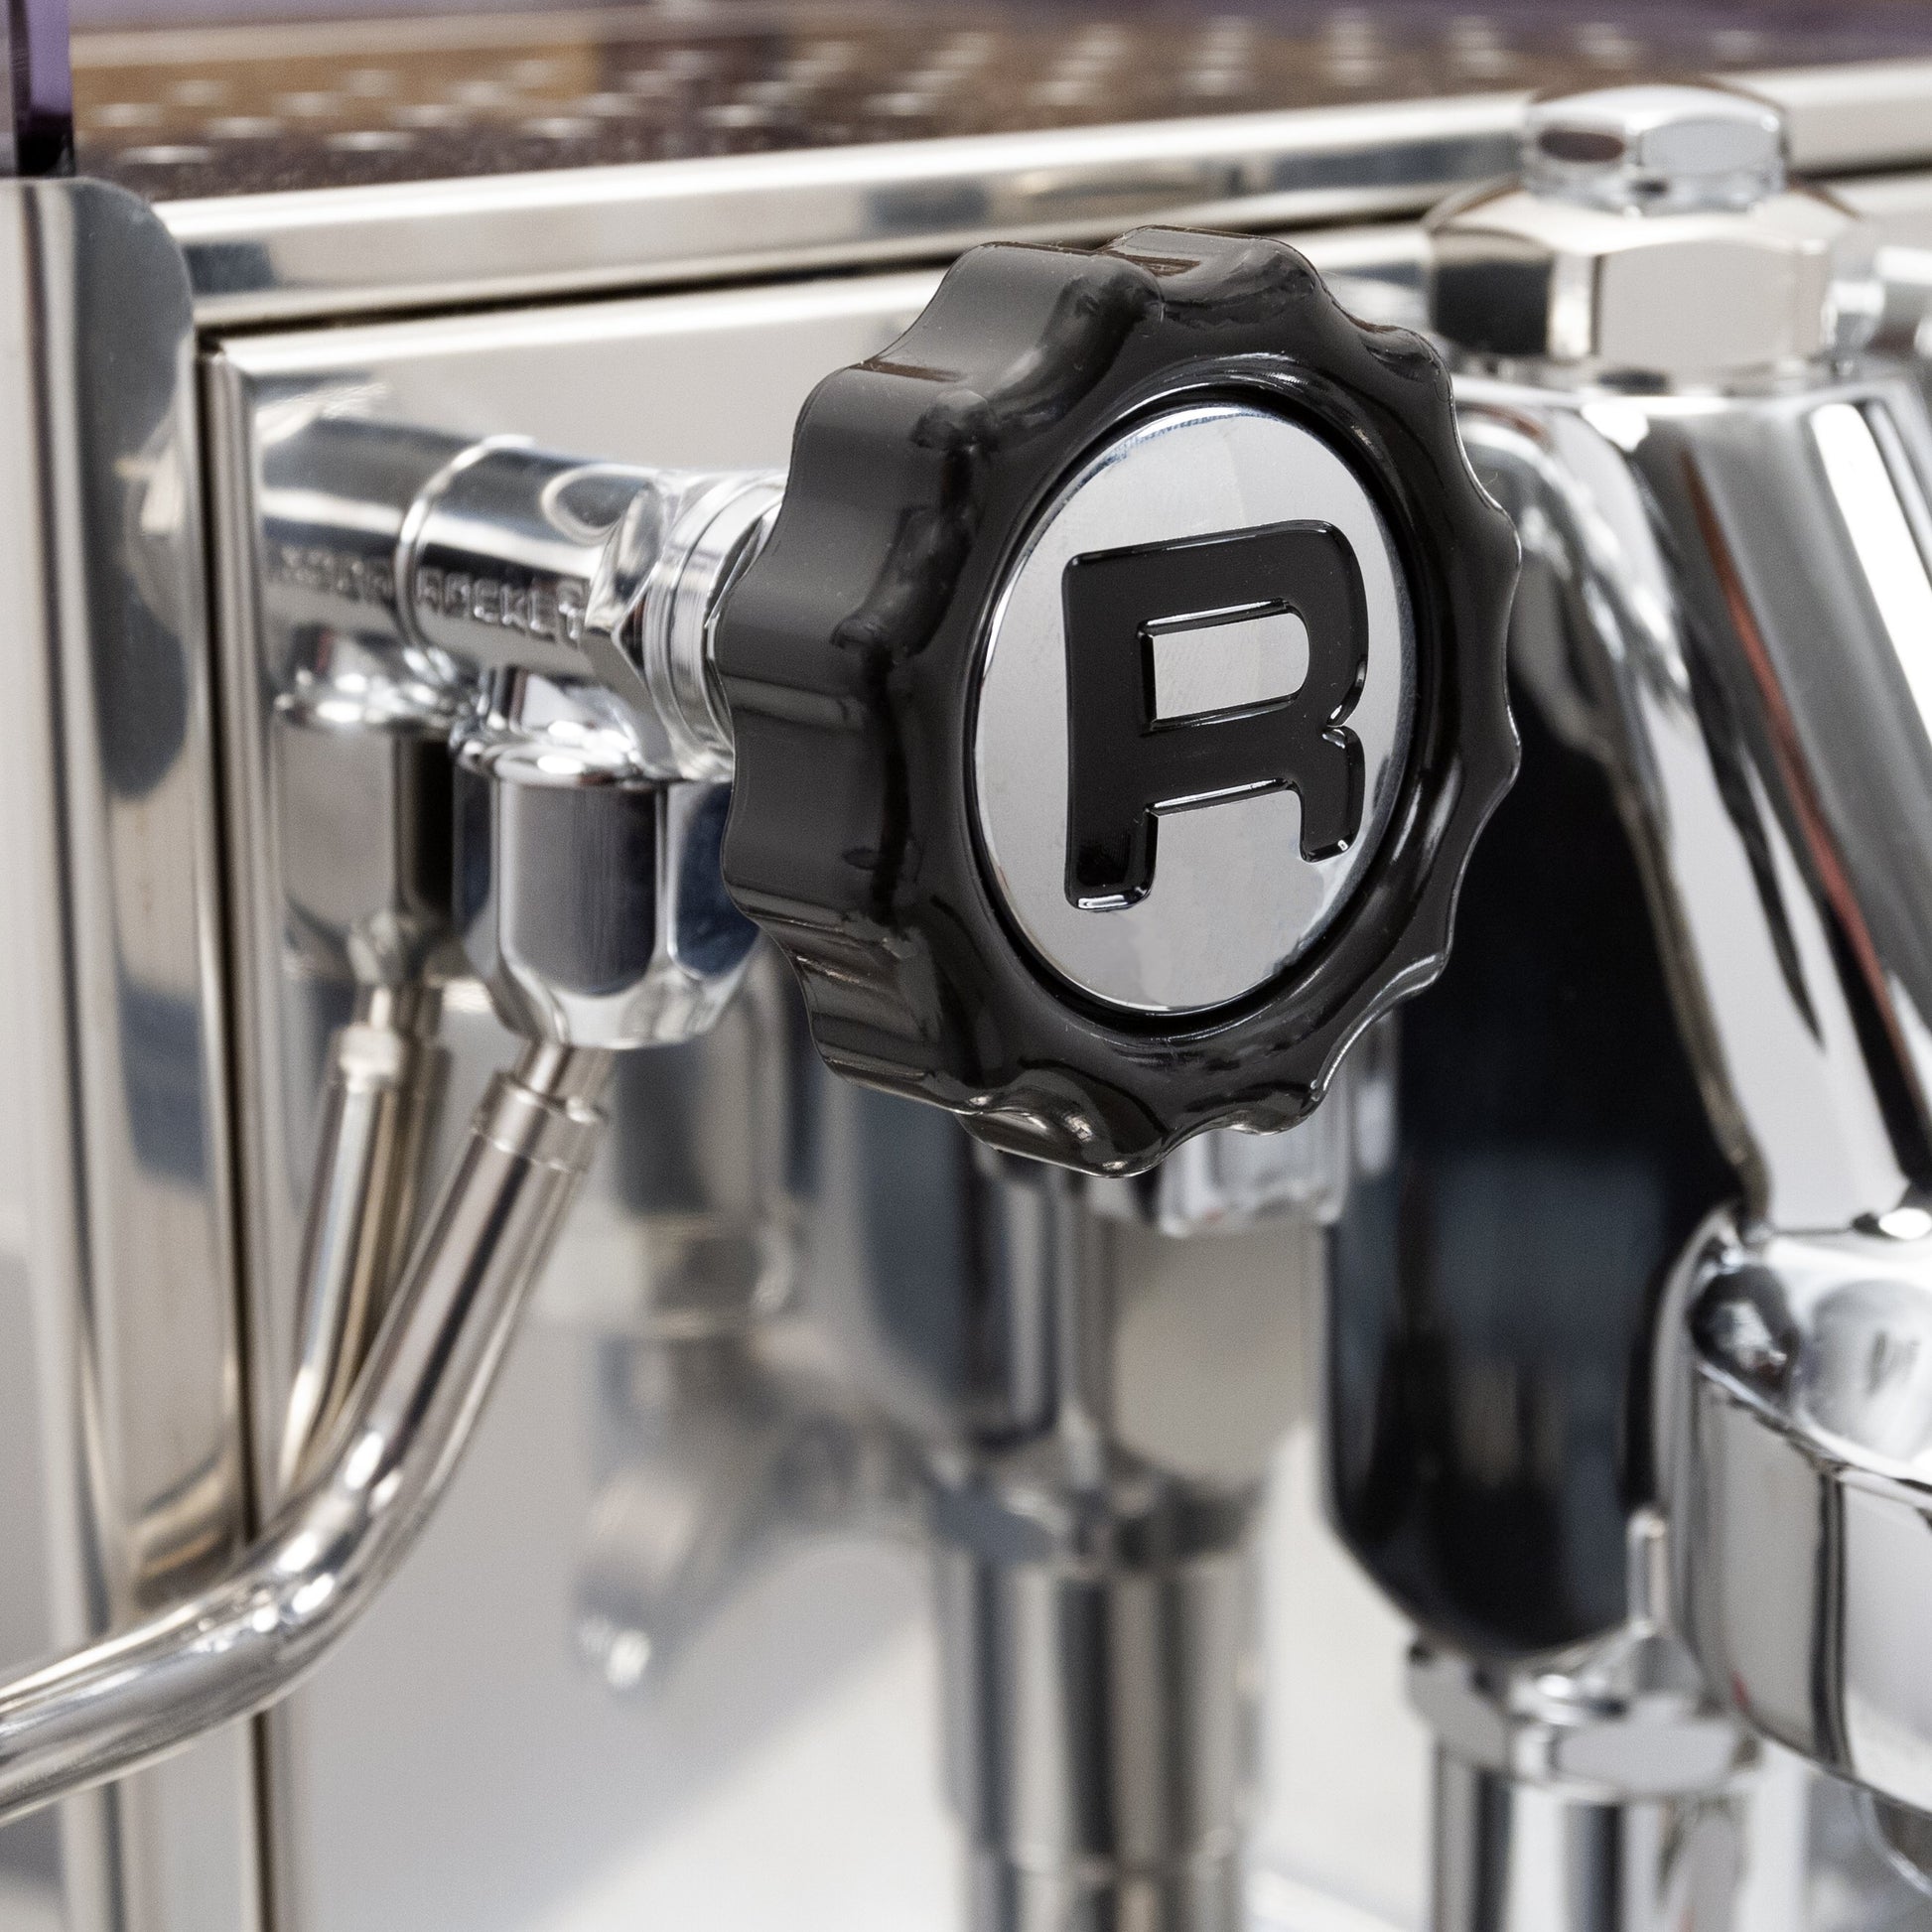 Steam knob, emblazoned with Rocket Espresso's "R"